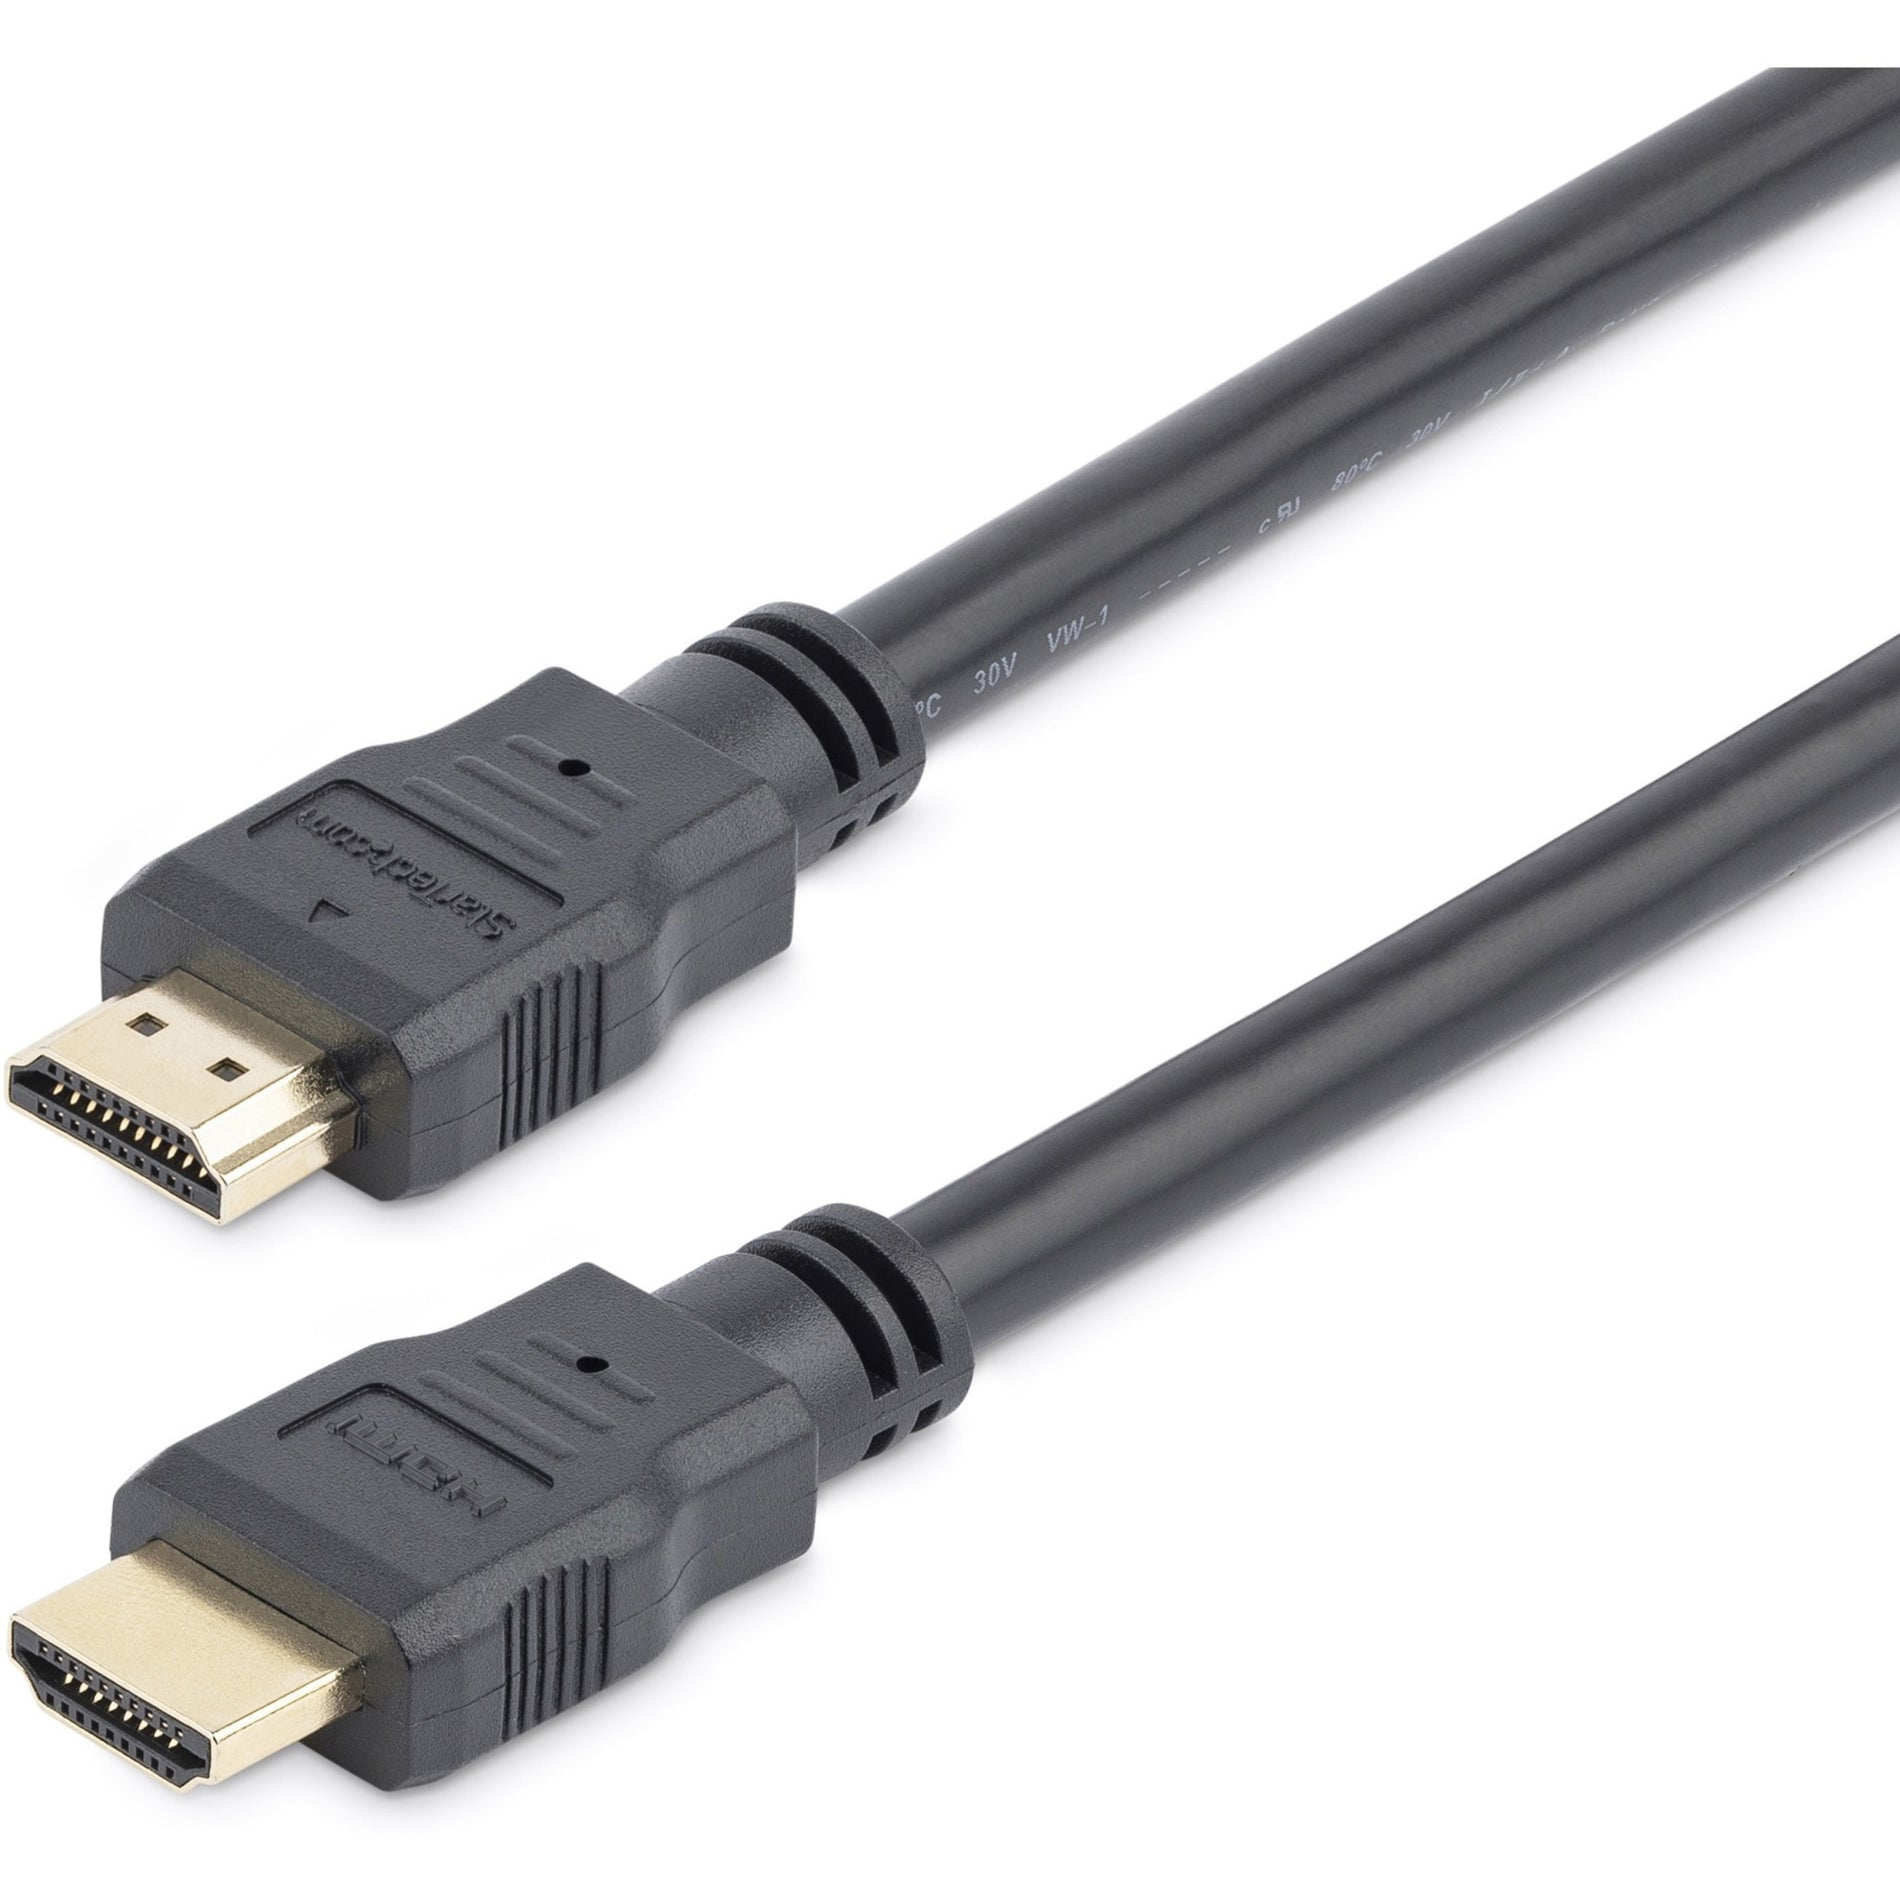 StarTech.com كبل HDMI فائق السرعة 2 متر - كبل HDMI Ultra HD 4k x 2k ، مرن ، مقاوم للتآكل ، أسود ستار تك.كوم